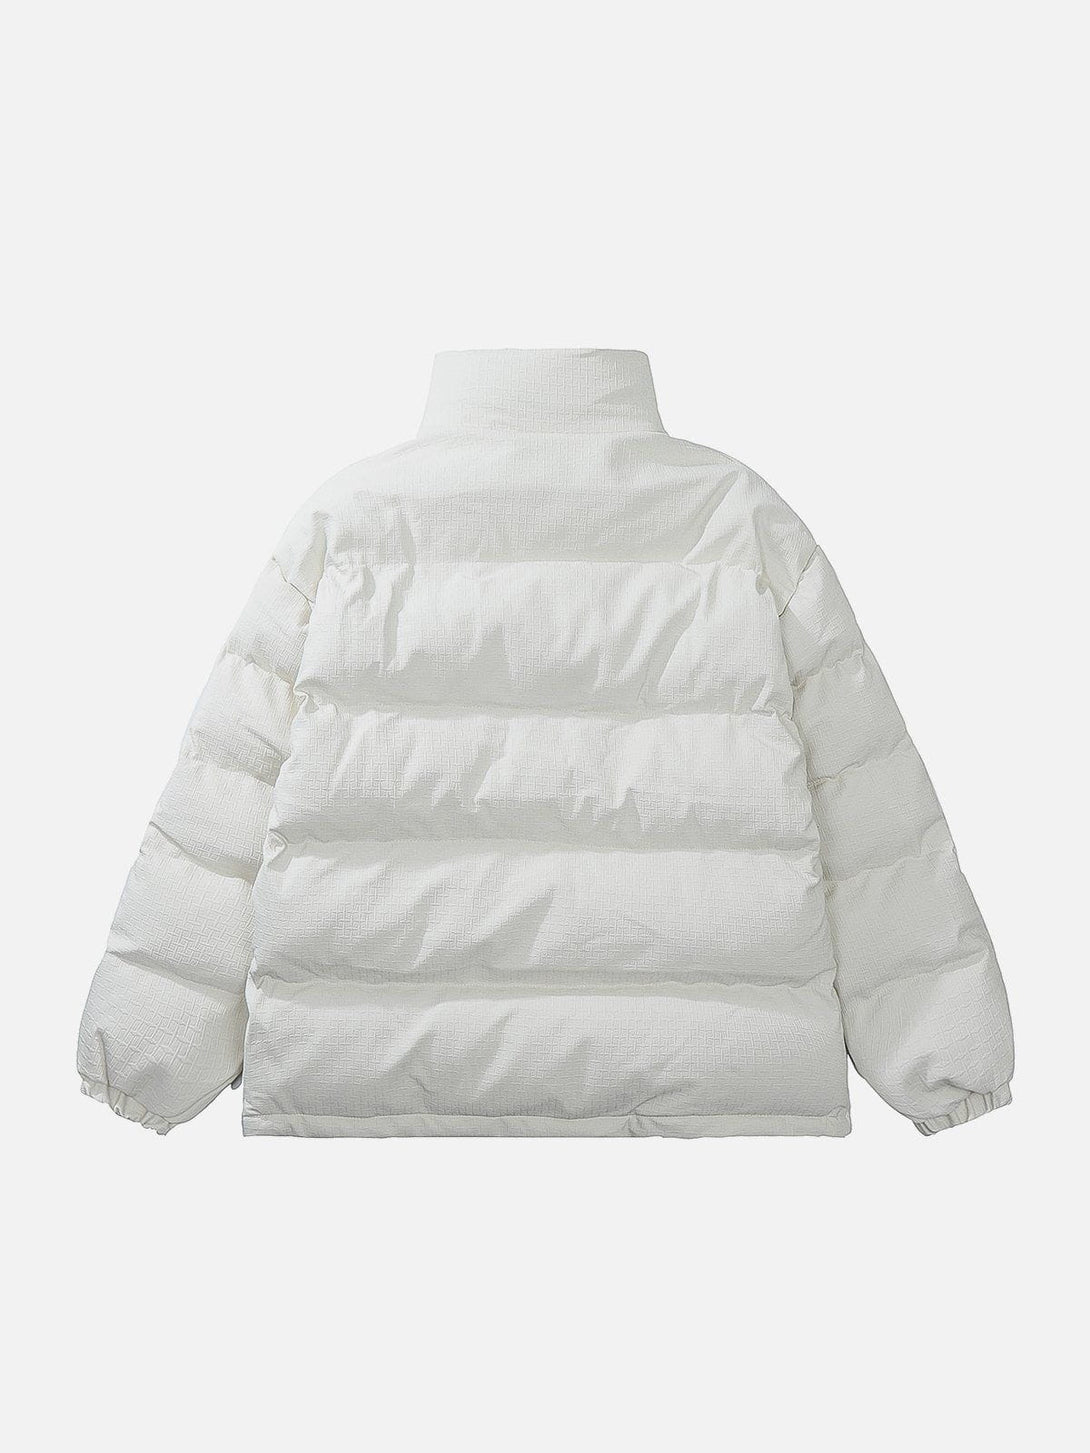 Majesda® - Fake Two Polo Collar Winter Coat outfit ideas streetwear fashion